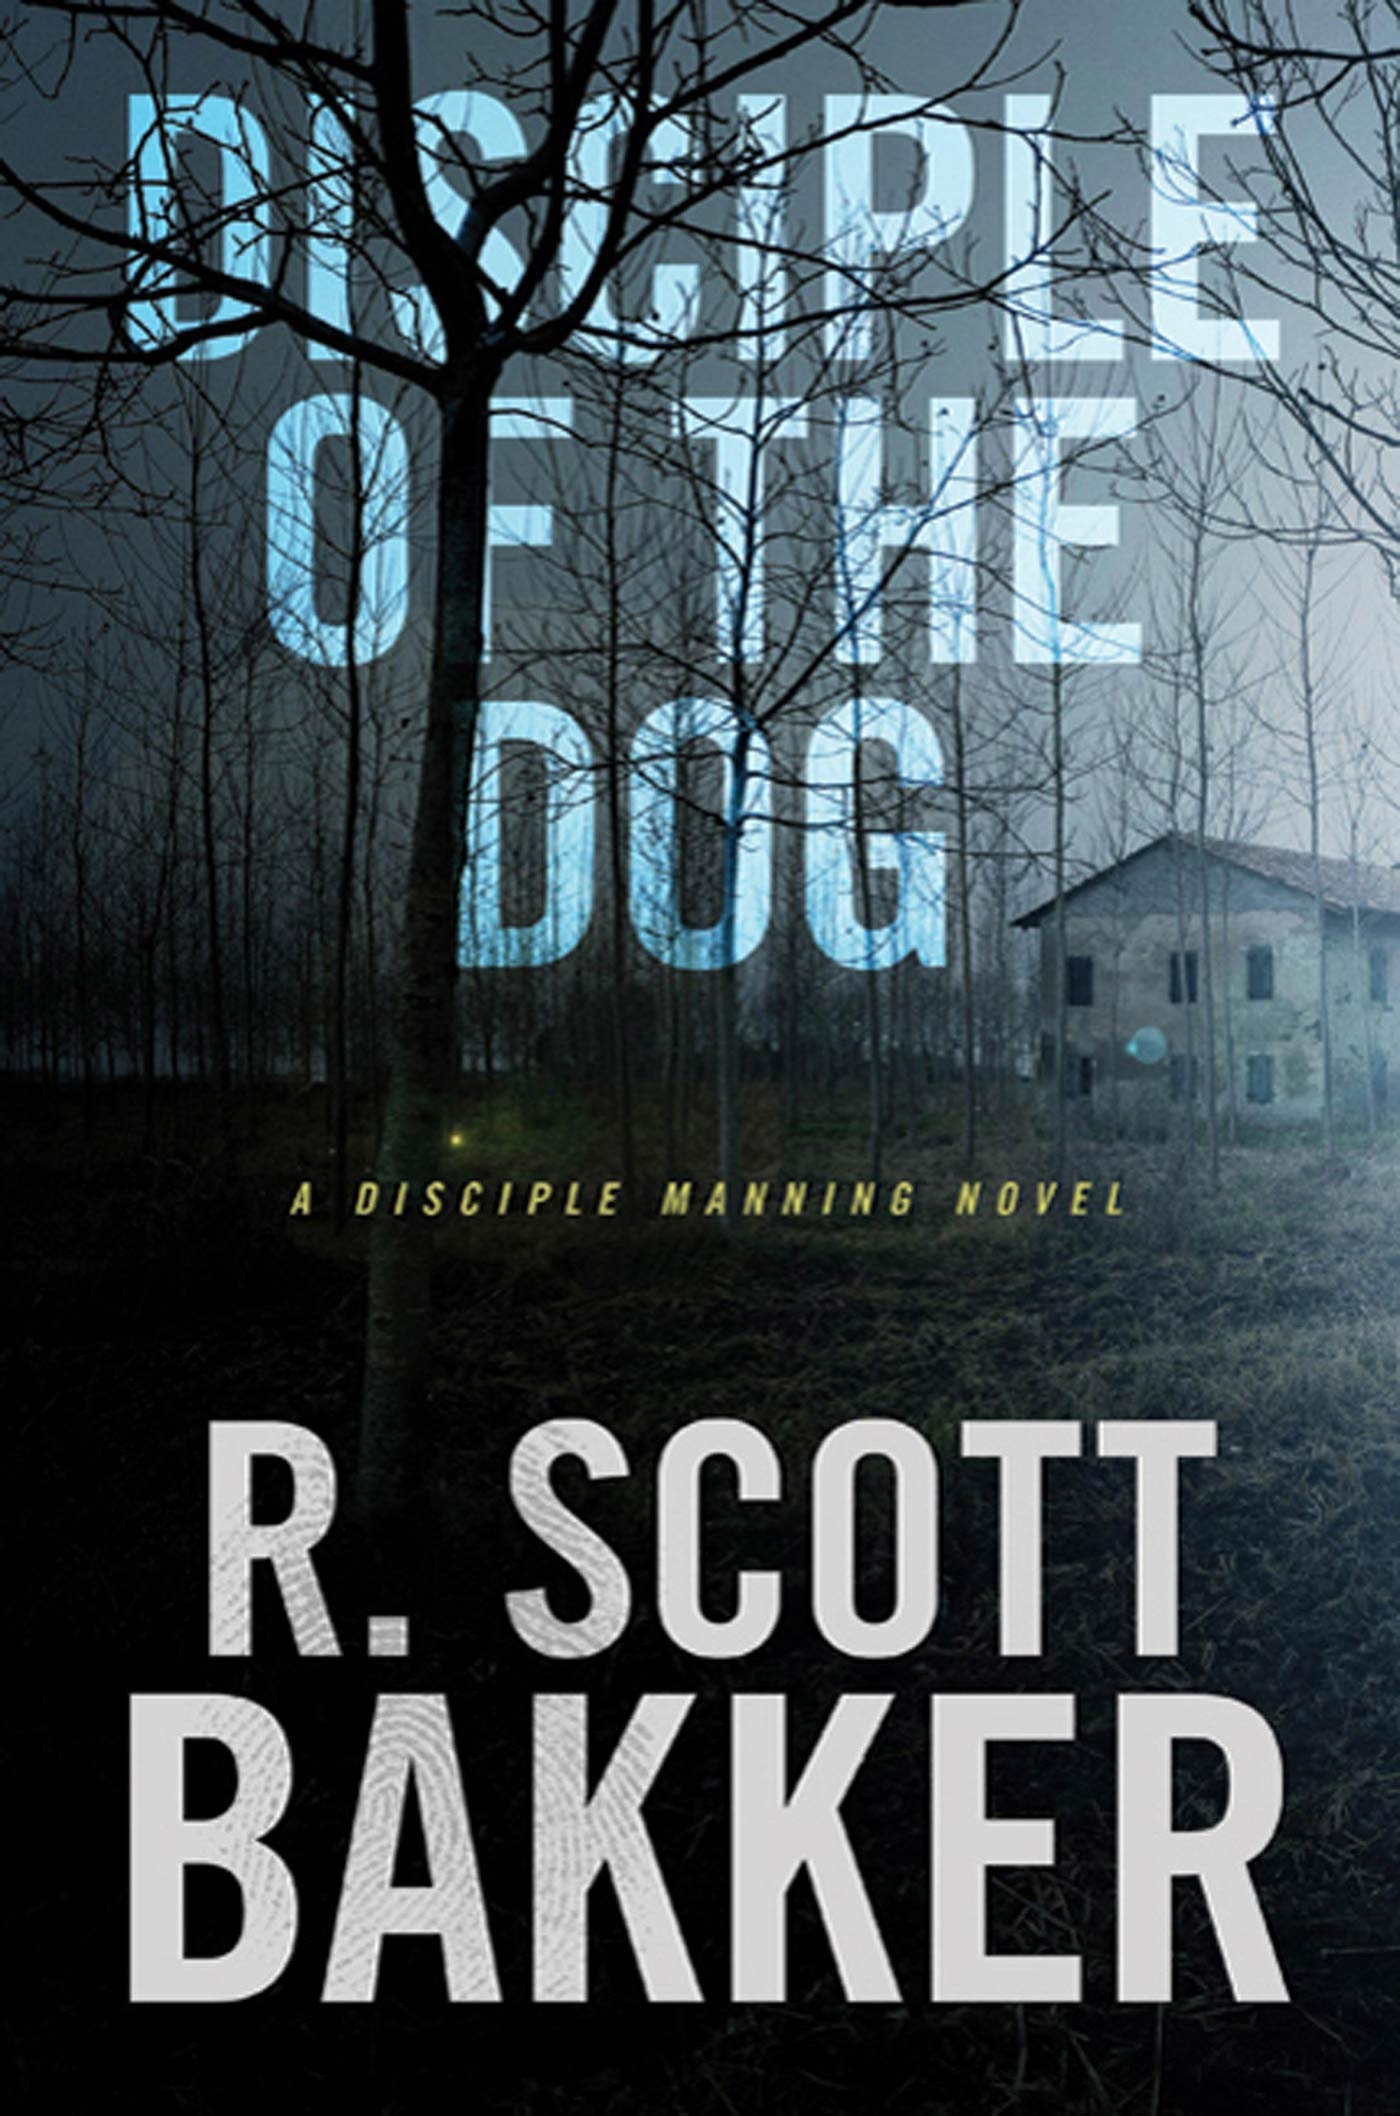 Disciple of the Dog : A Disciple Manning Novel by R. Scott Bakker